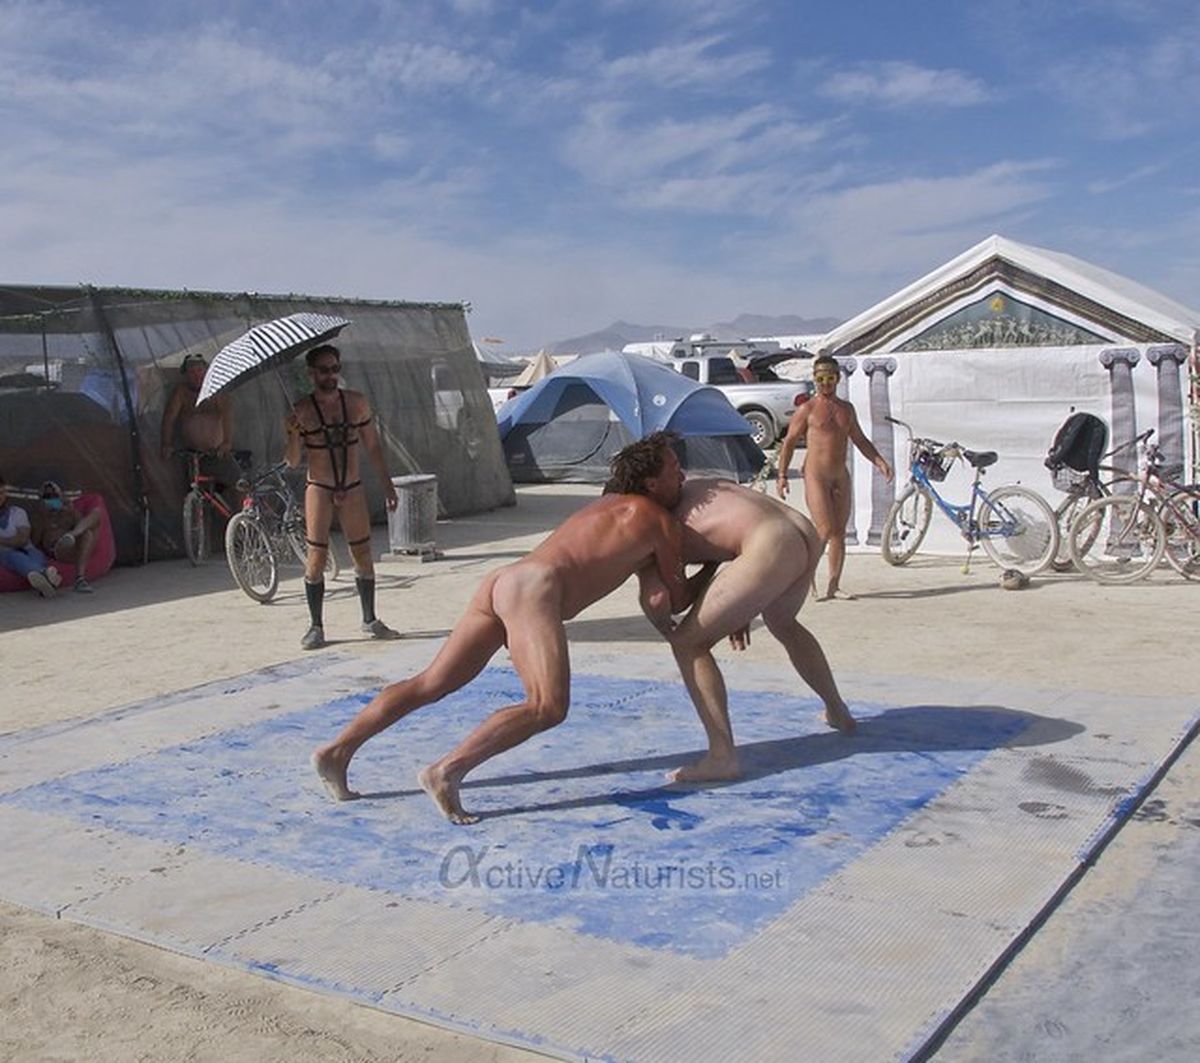 https://www.nudismlife.com/galleries/public_nudity/burning_man/active_naturists/active_naturists_060.jpg